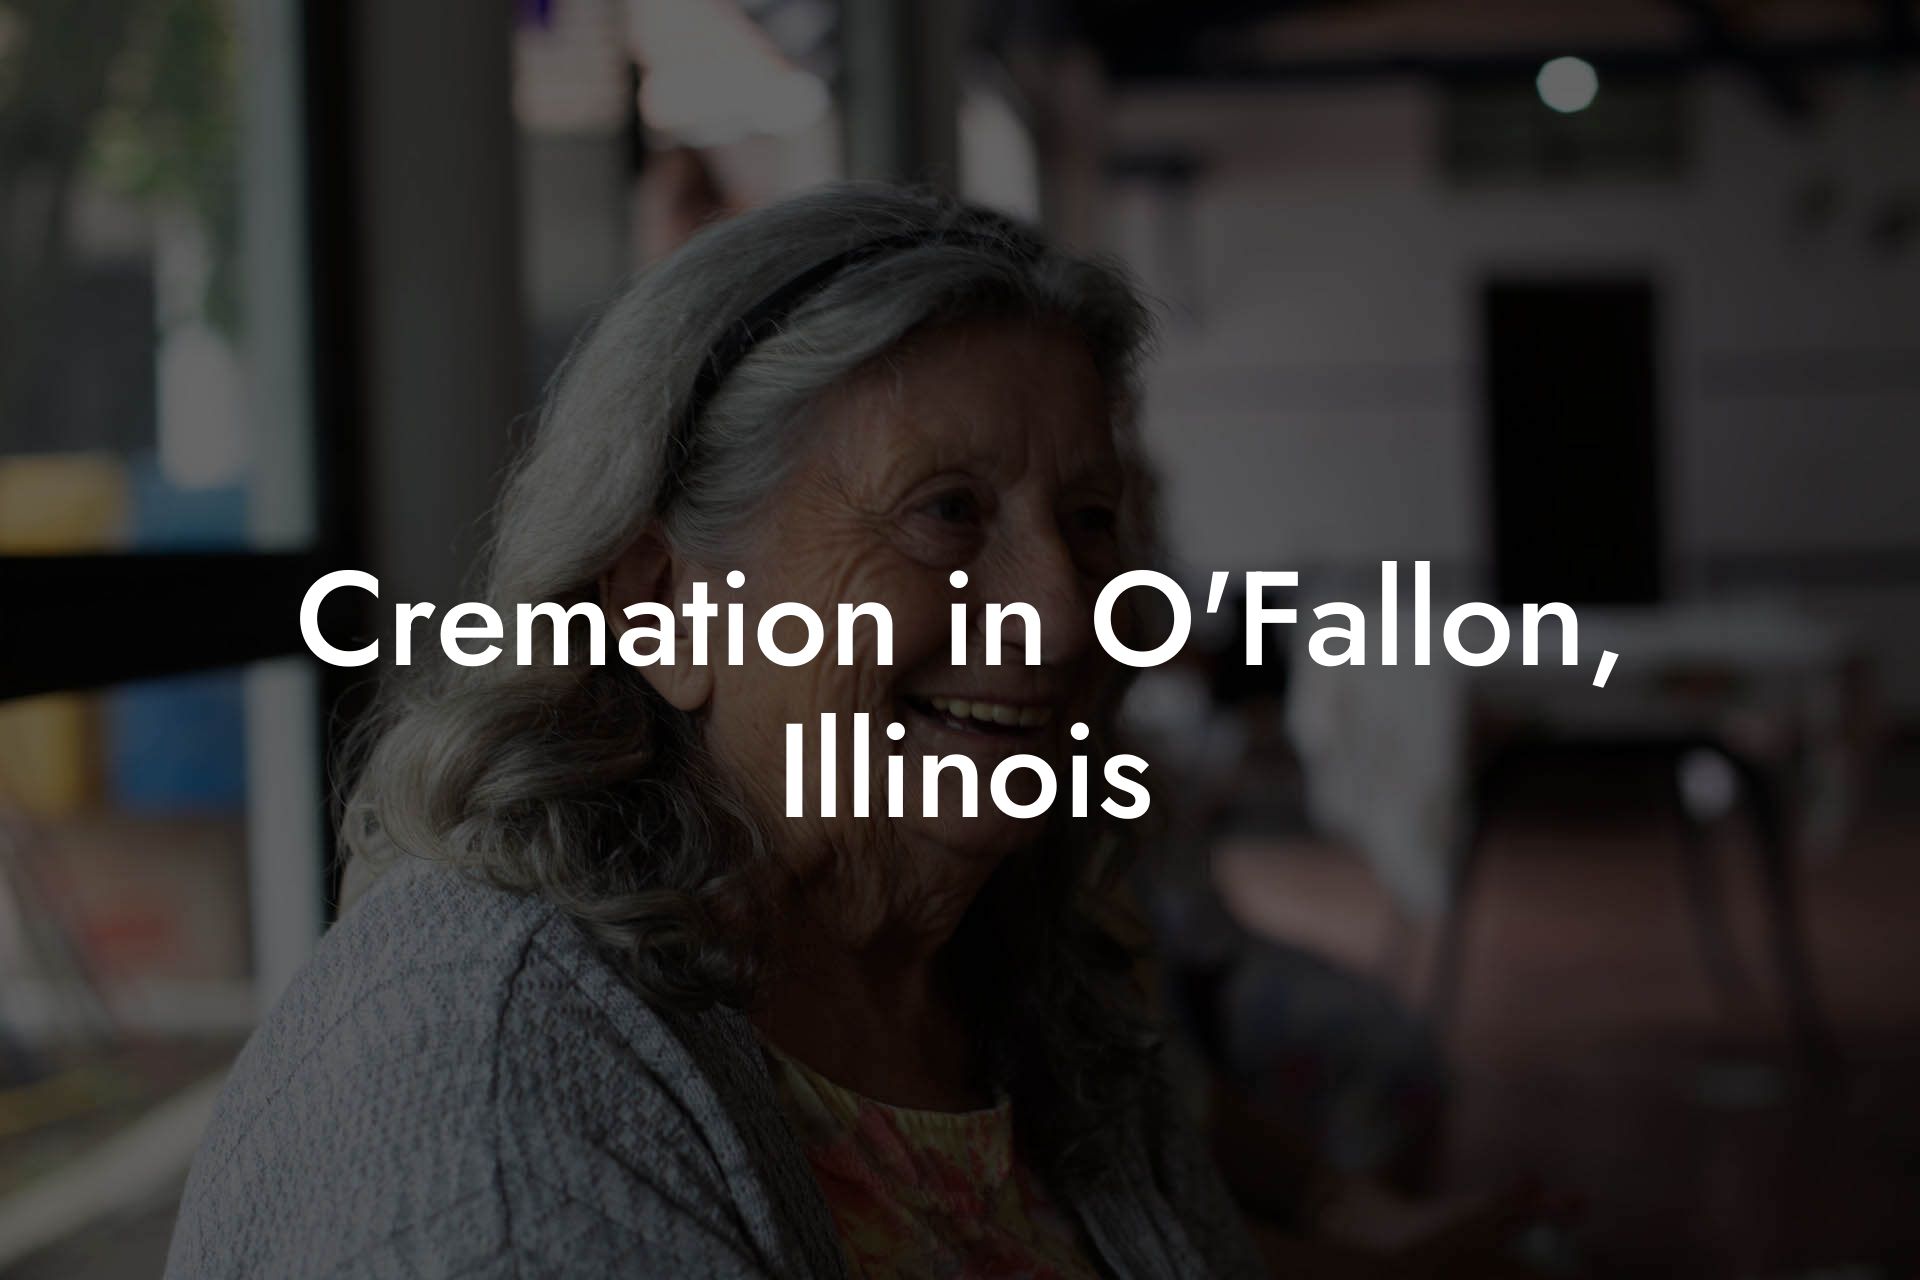 Cremation in O'Fallon, Illinois